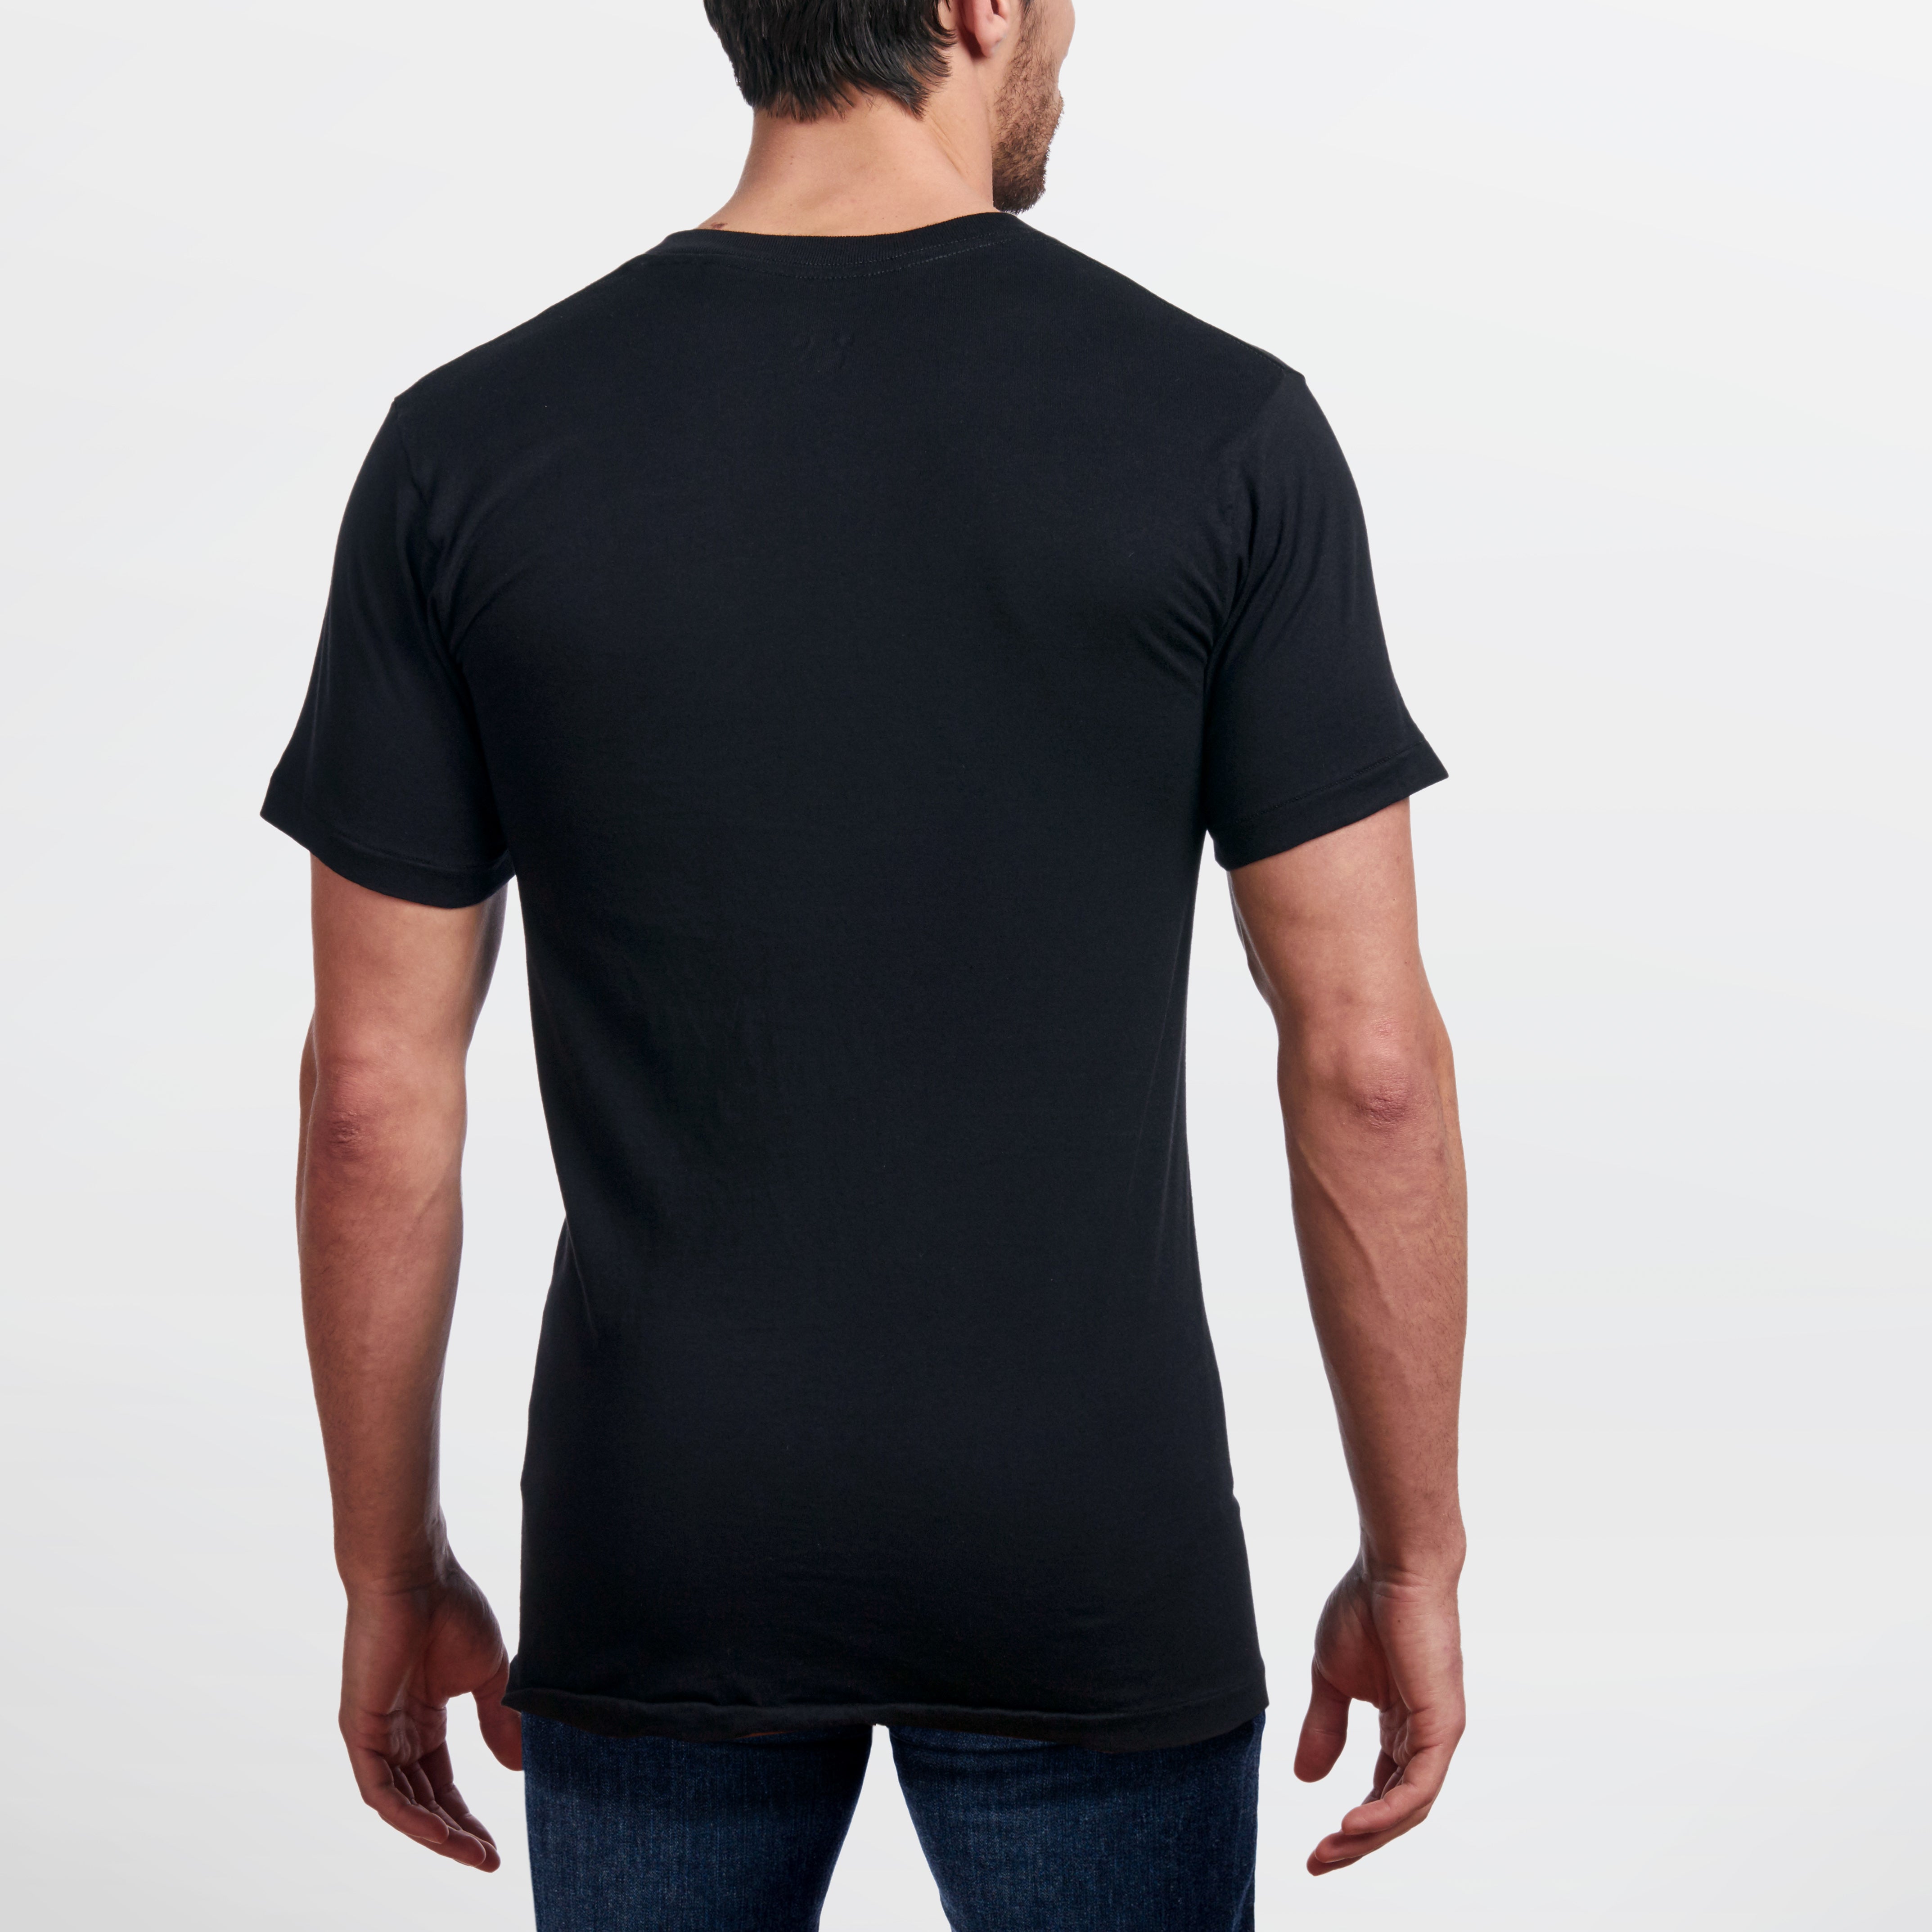 Camisetas premium de cuello redondo para hombre - Pack de 2 negras